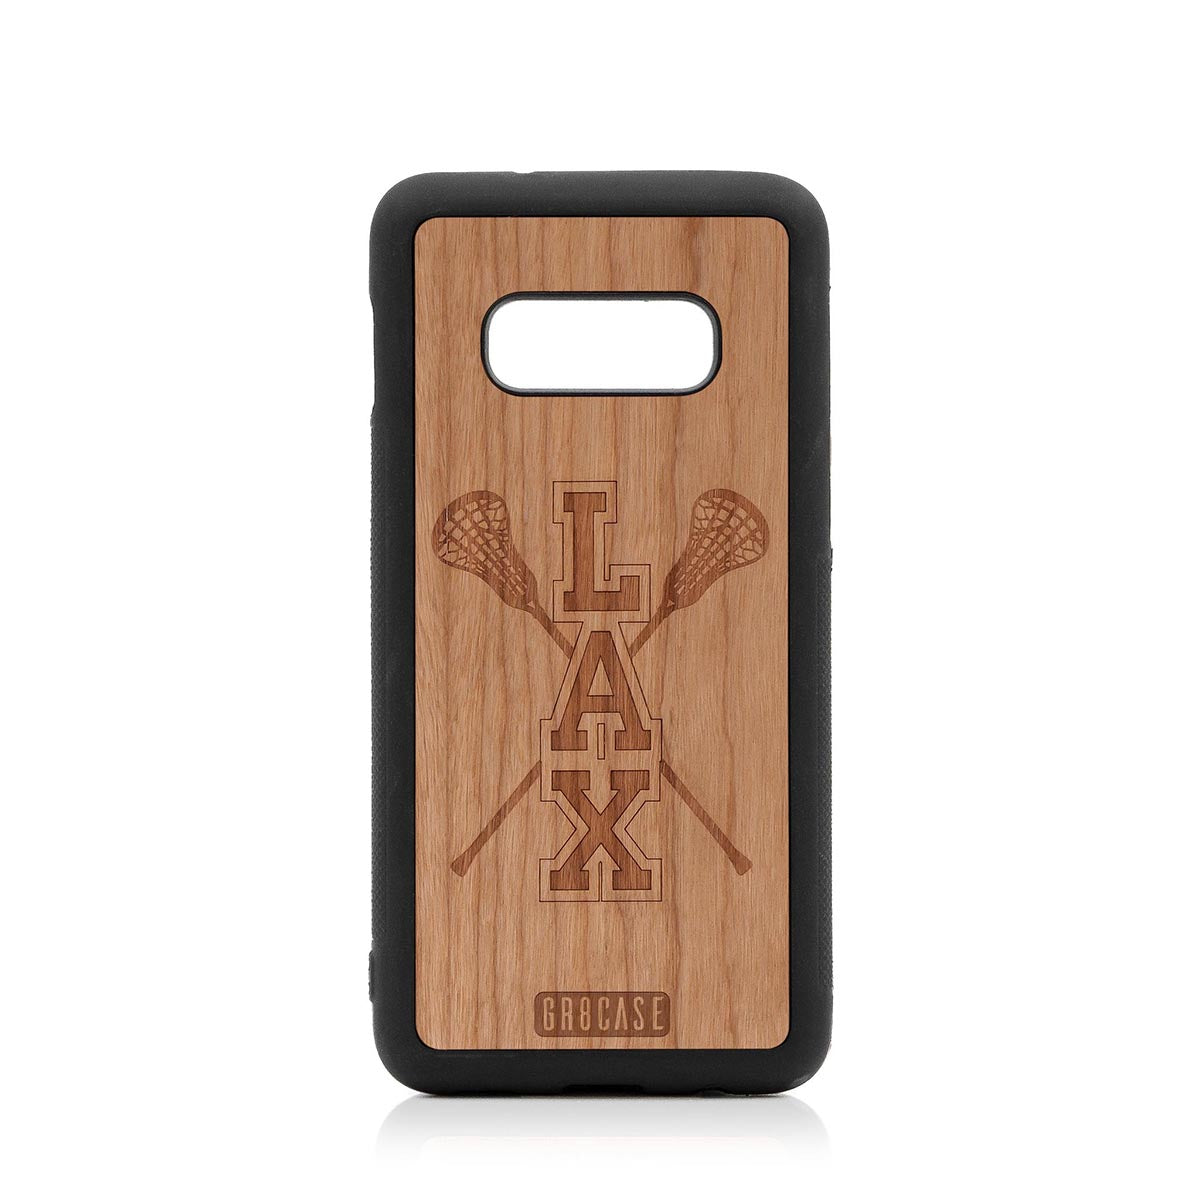 Lacrosse (LAX) Sticks Design Wood Case Samsung Galaxy S10E by GR8CASE